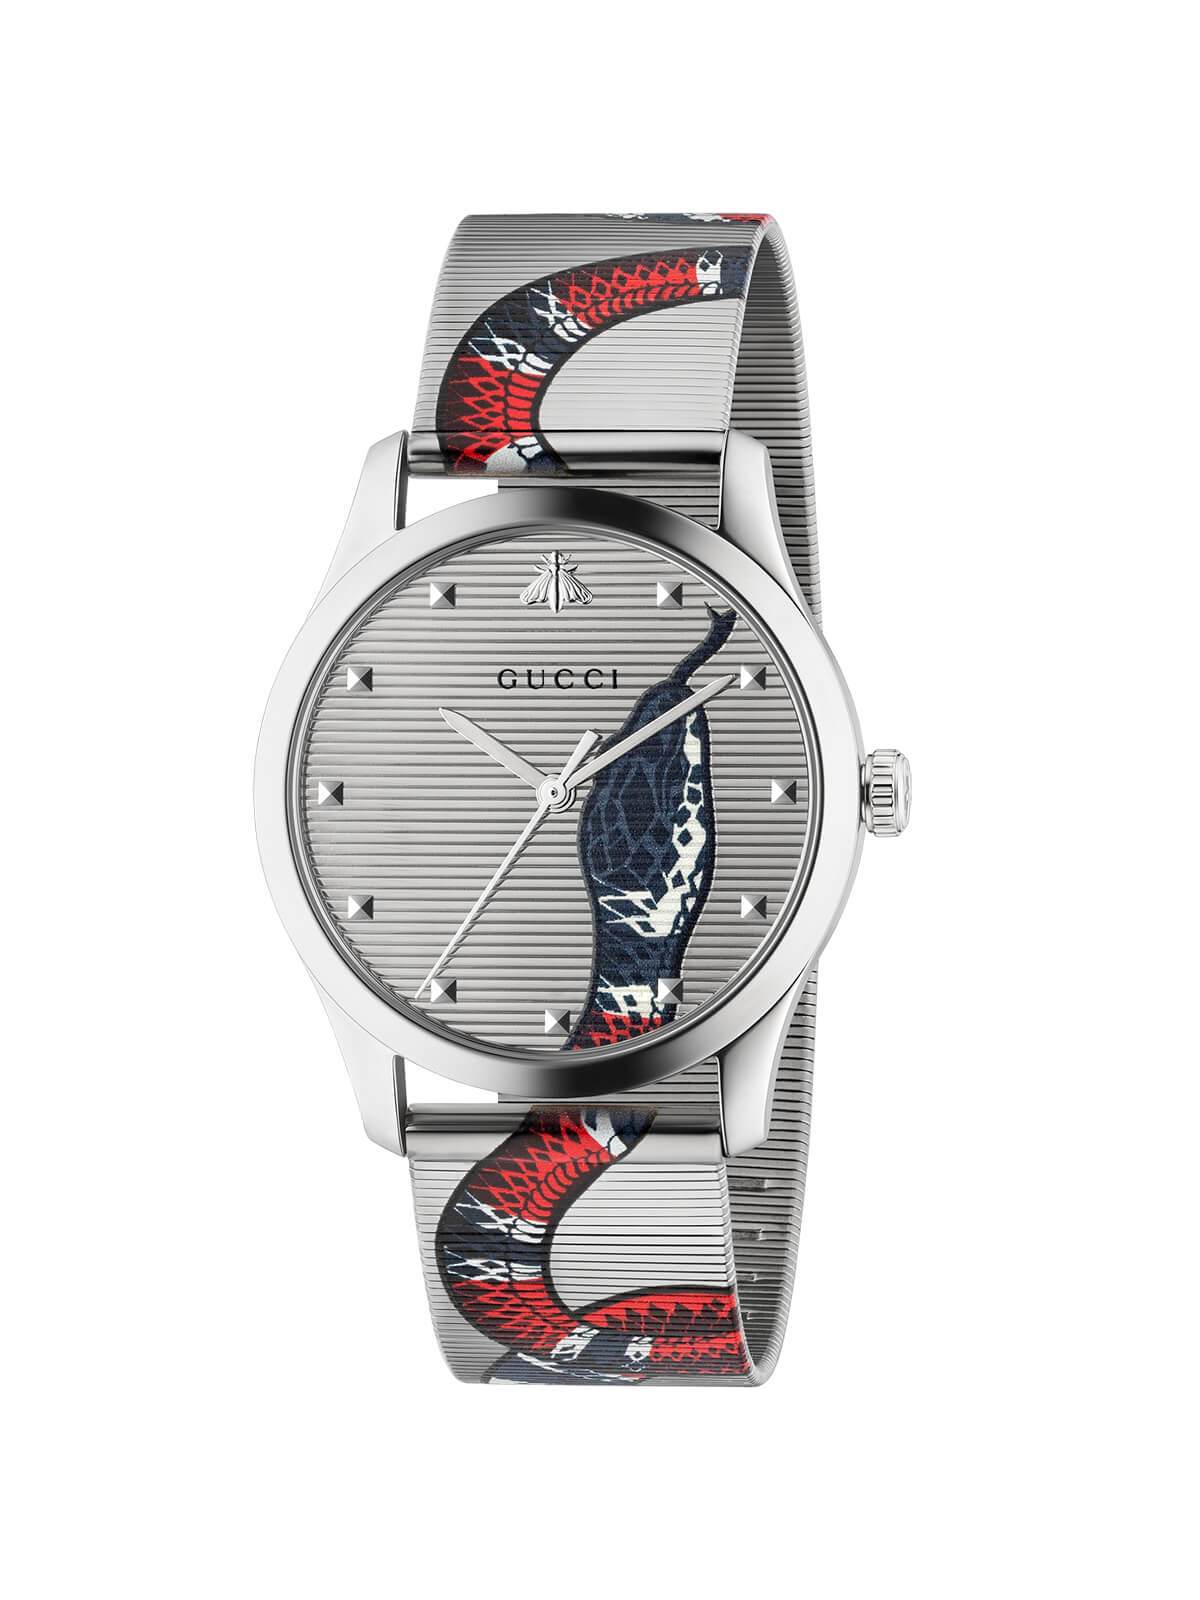 SALE Gucci G-Timeless Snake Watch 38mm YA1264123 *Ex-Display*